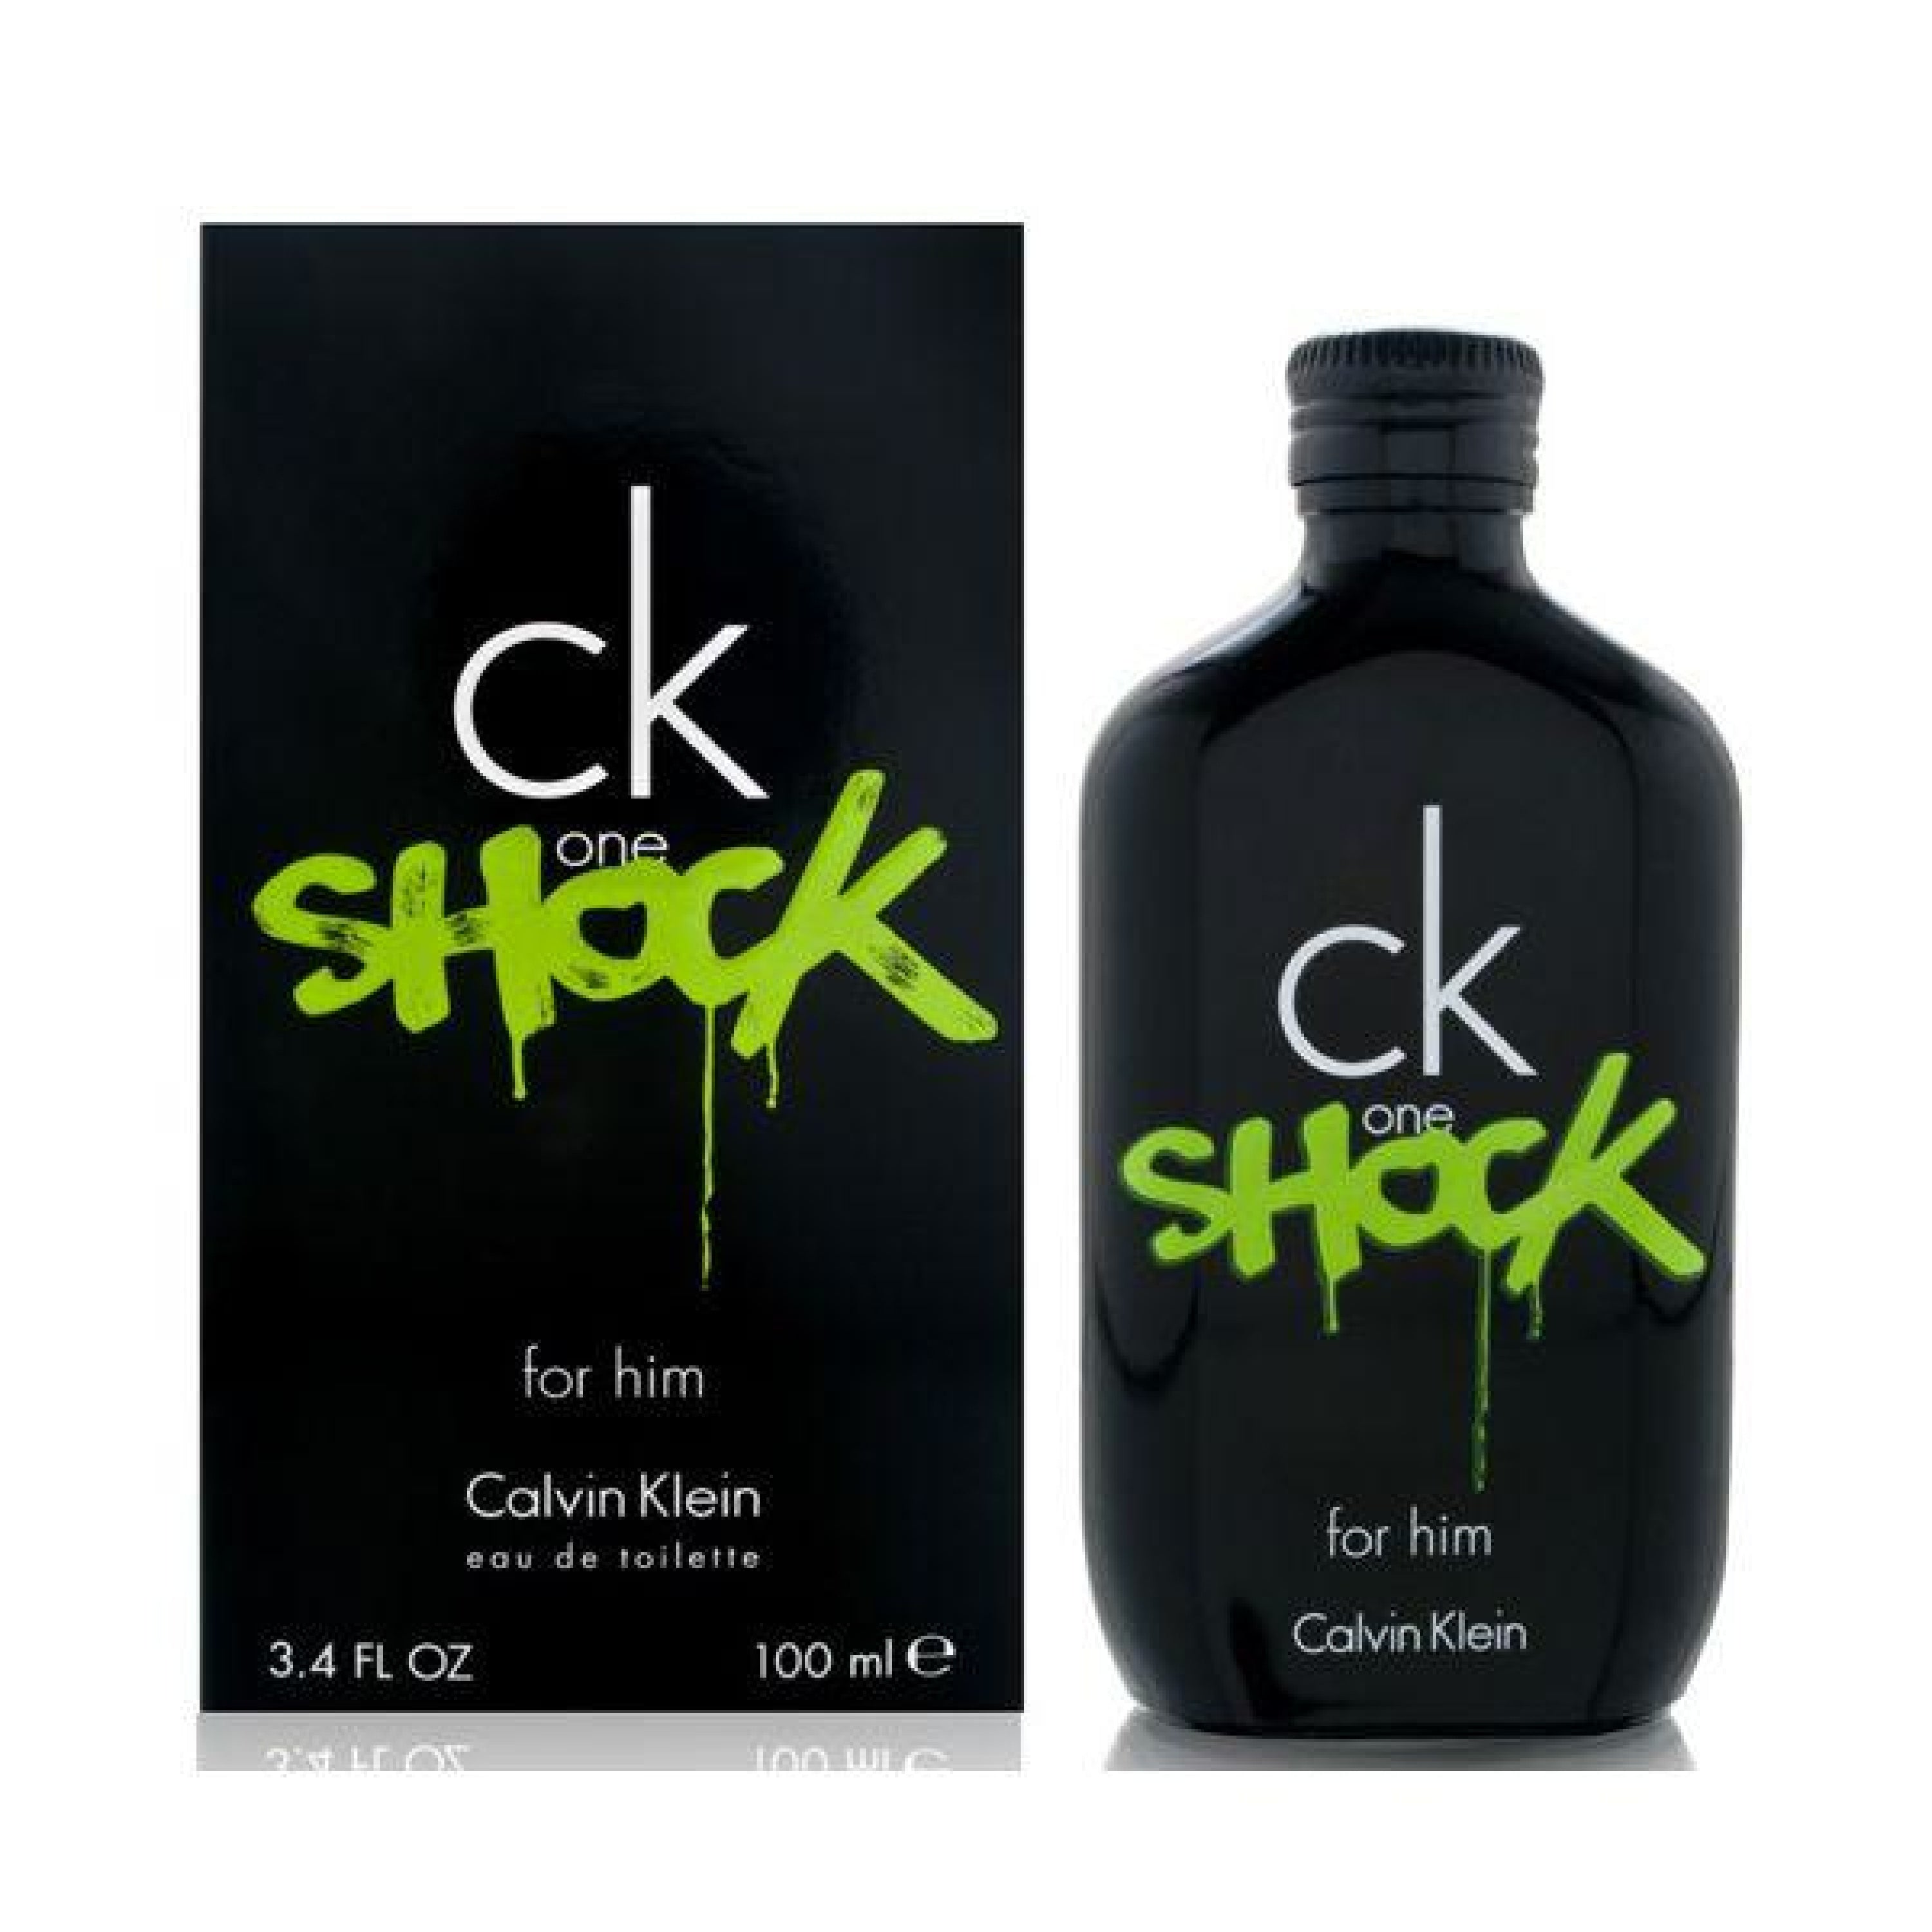 Calvin Klein CK One Shock for Her 100ml